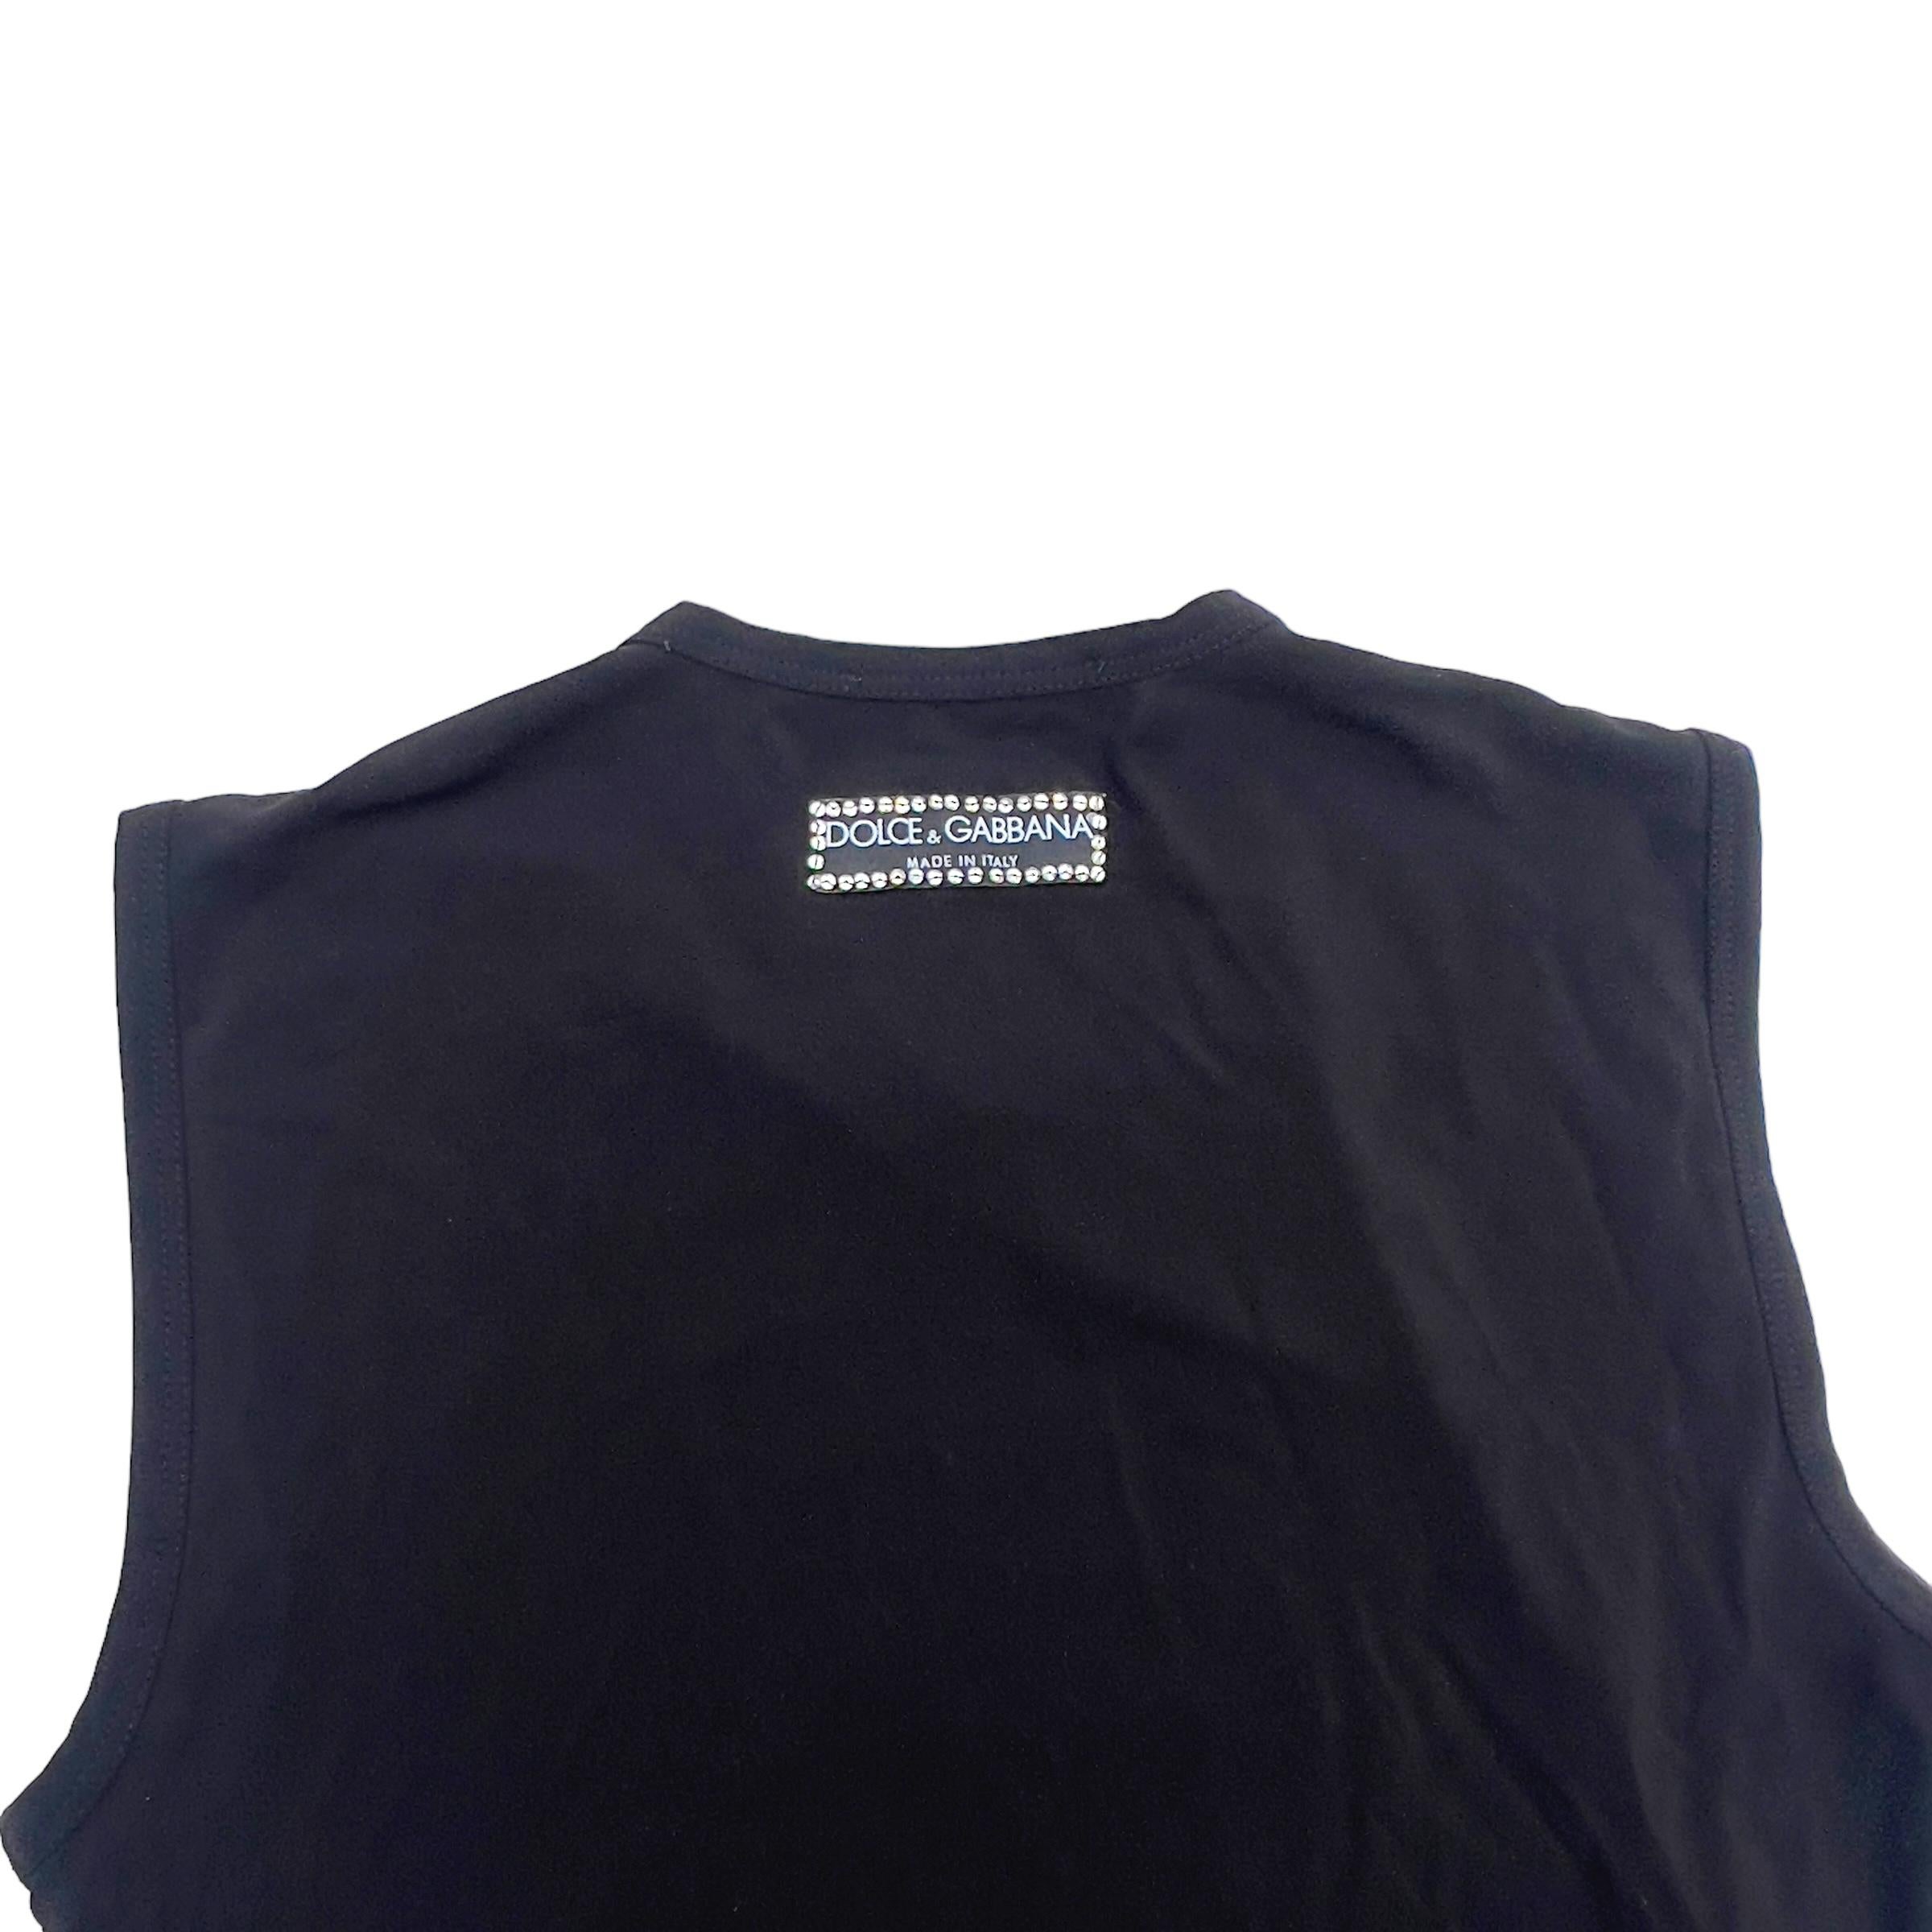 Women's Dolce & Gabbana black mesh and rhinestone Madonna 'LIKE A VIRGIN' vest, ss 2001 For Sale